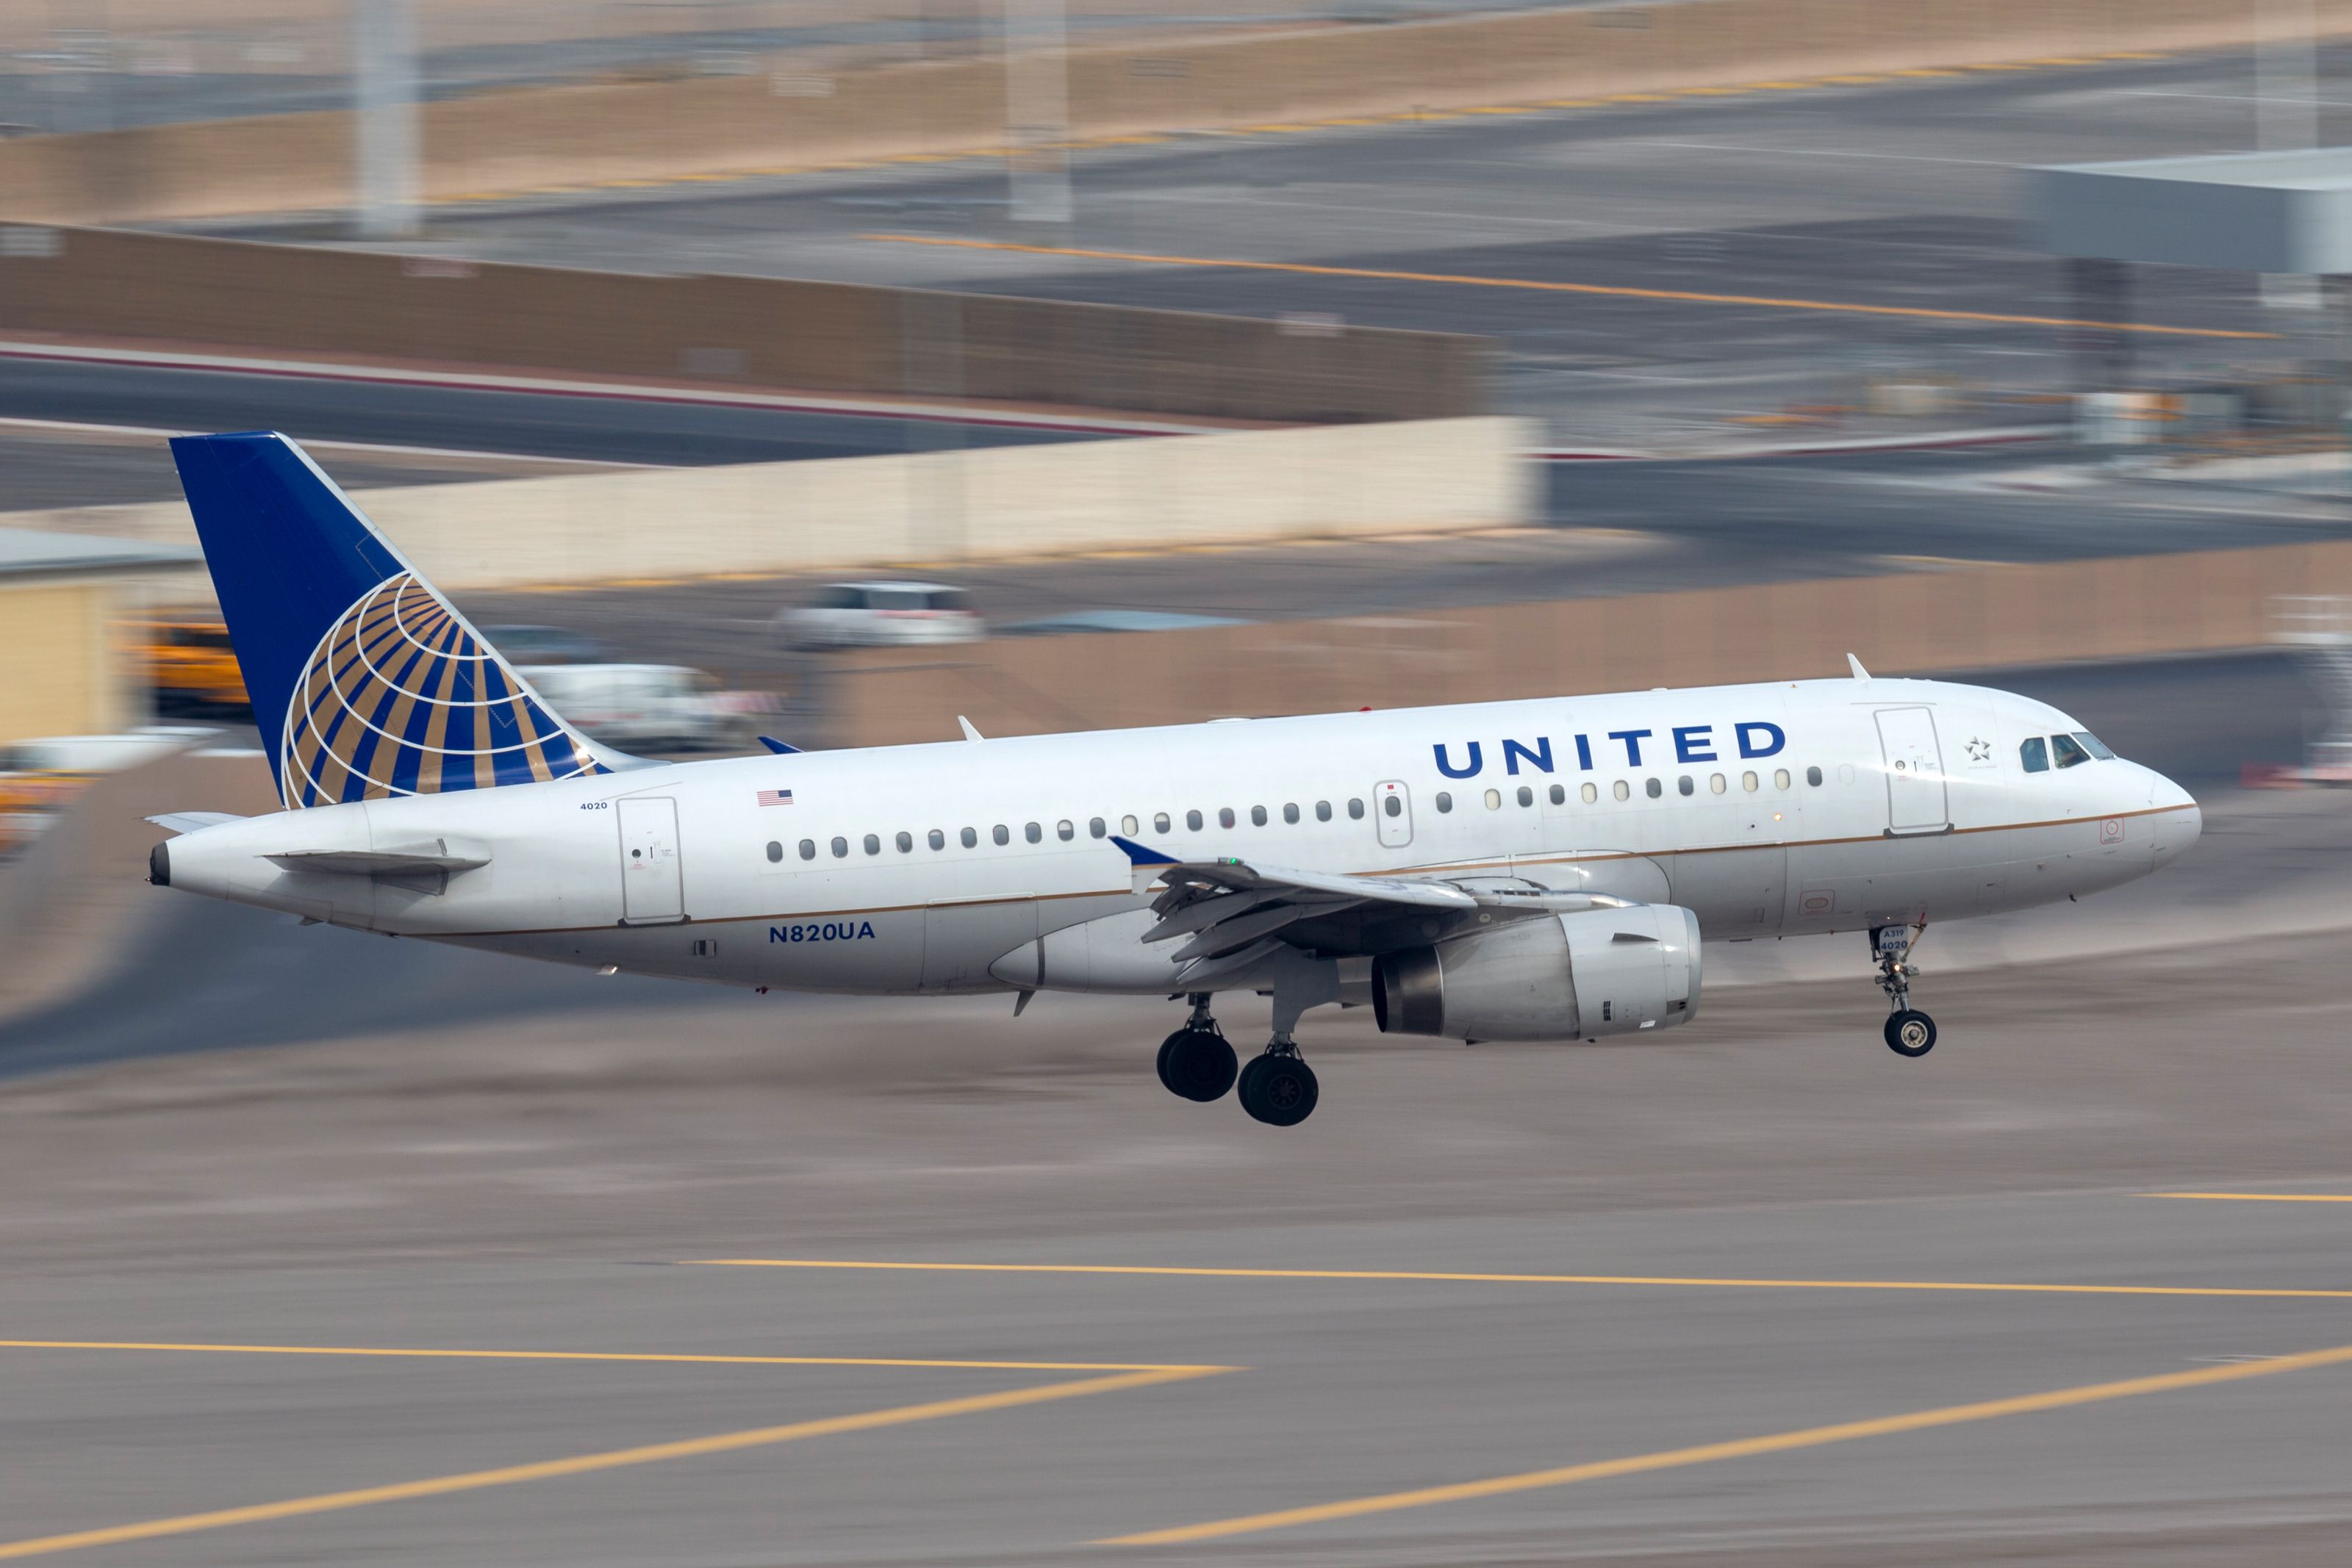 United Airlines Airbus A319 (N820UA) landing at Harry Reid International Airport.